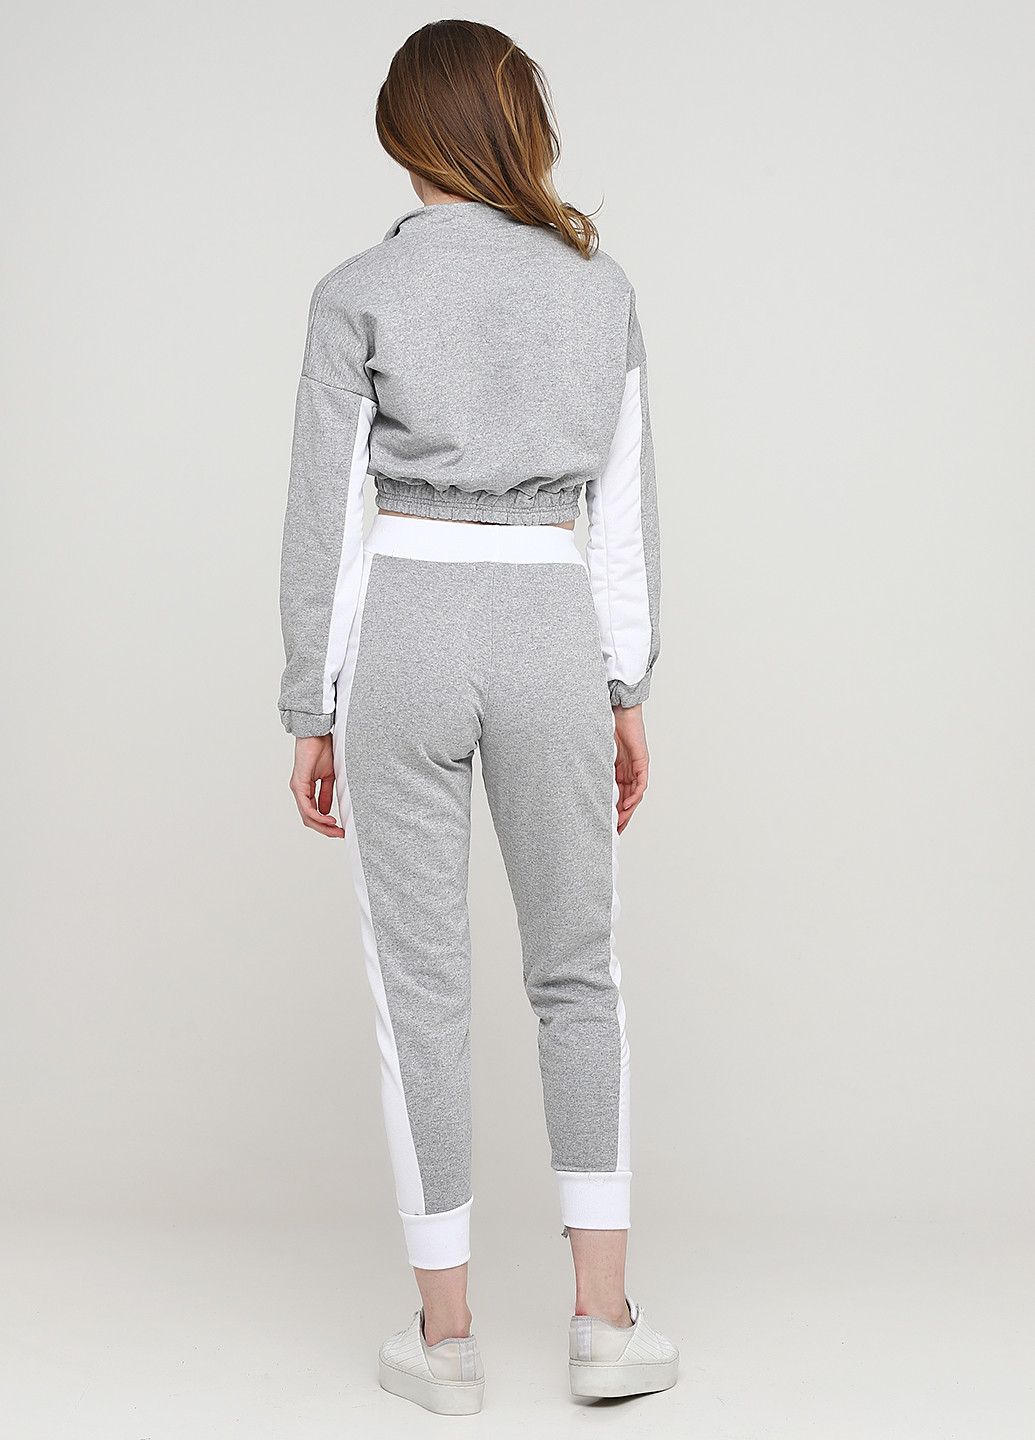 Костюм (свитшот, брюки) Stylewise меланж светло-серый спортивный футер, полиэстер